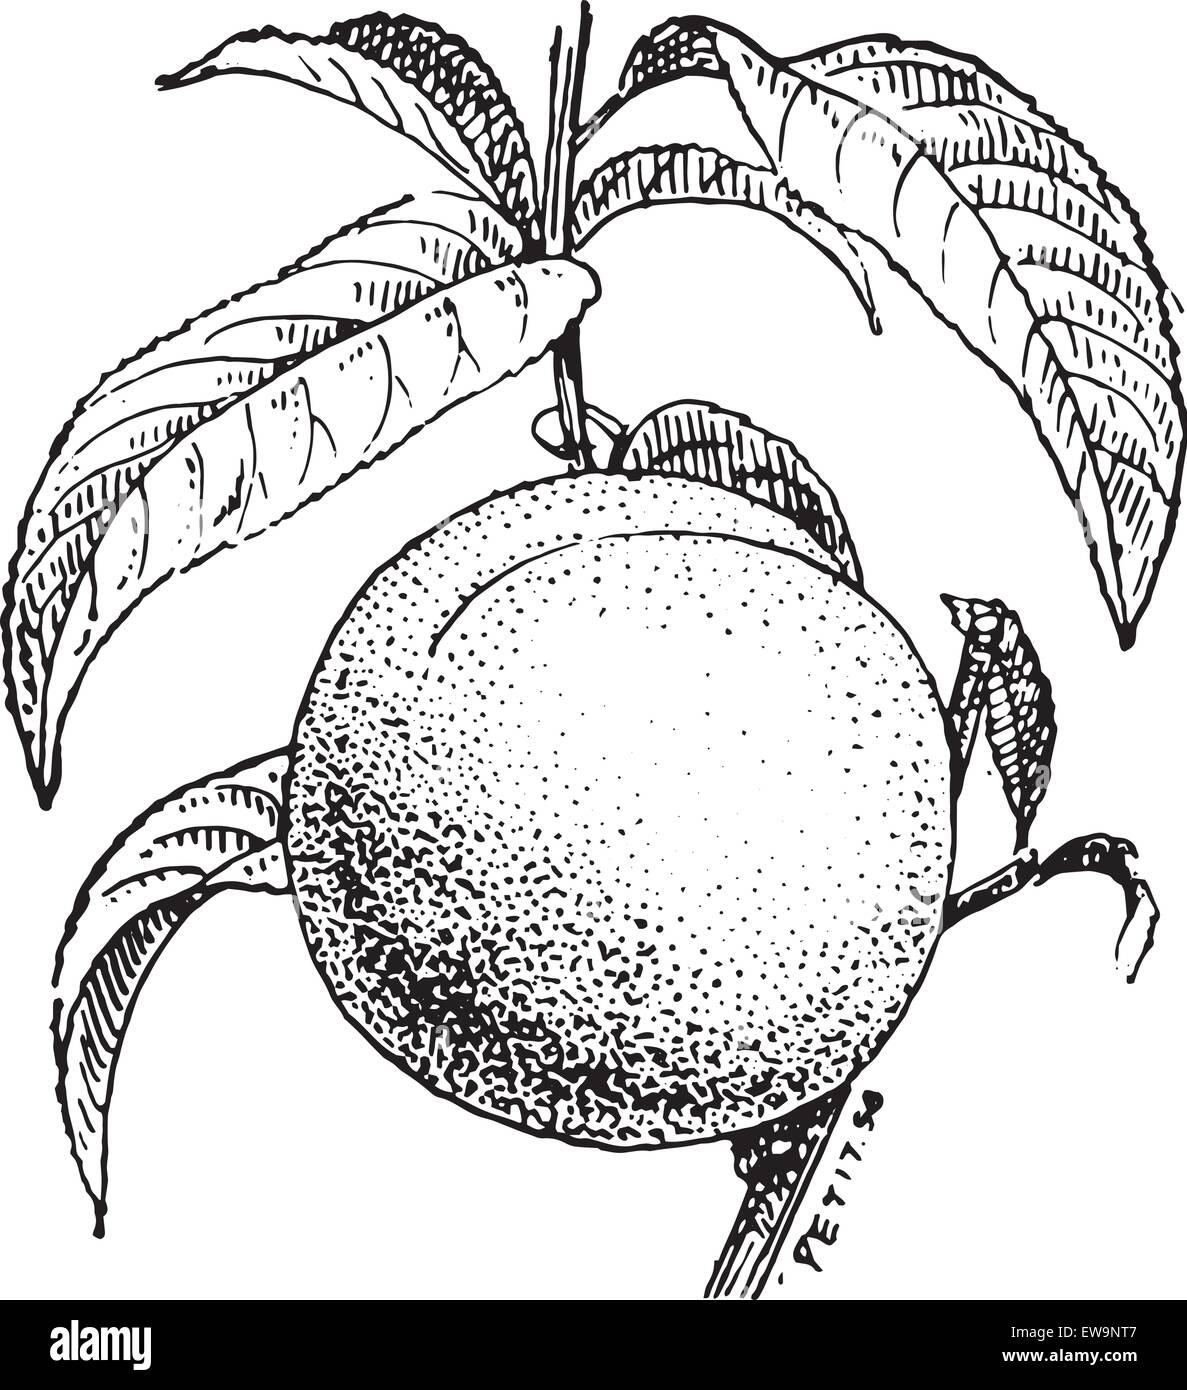 Prunus persica leaf Immagini Vettoriali Stock - Alamy